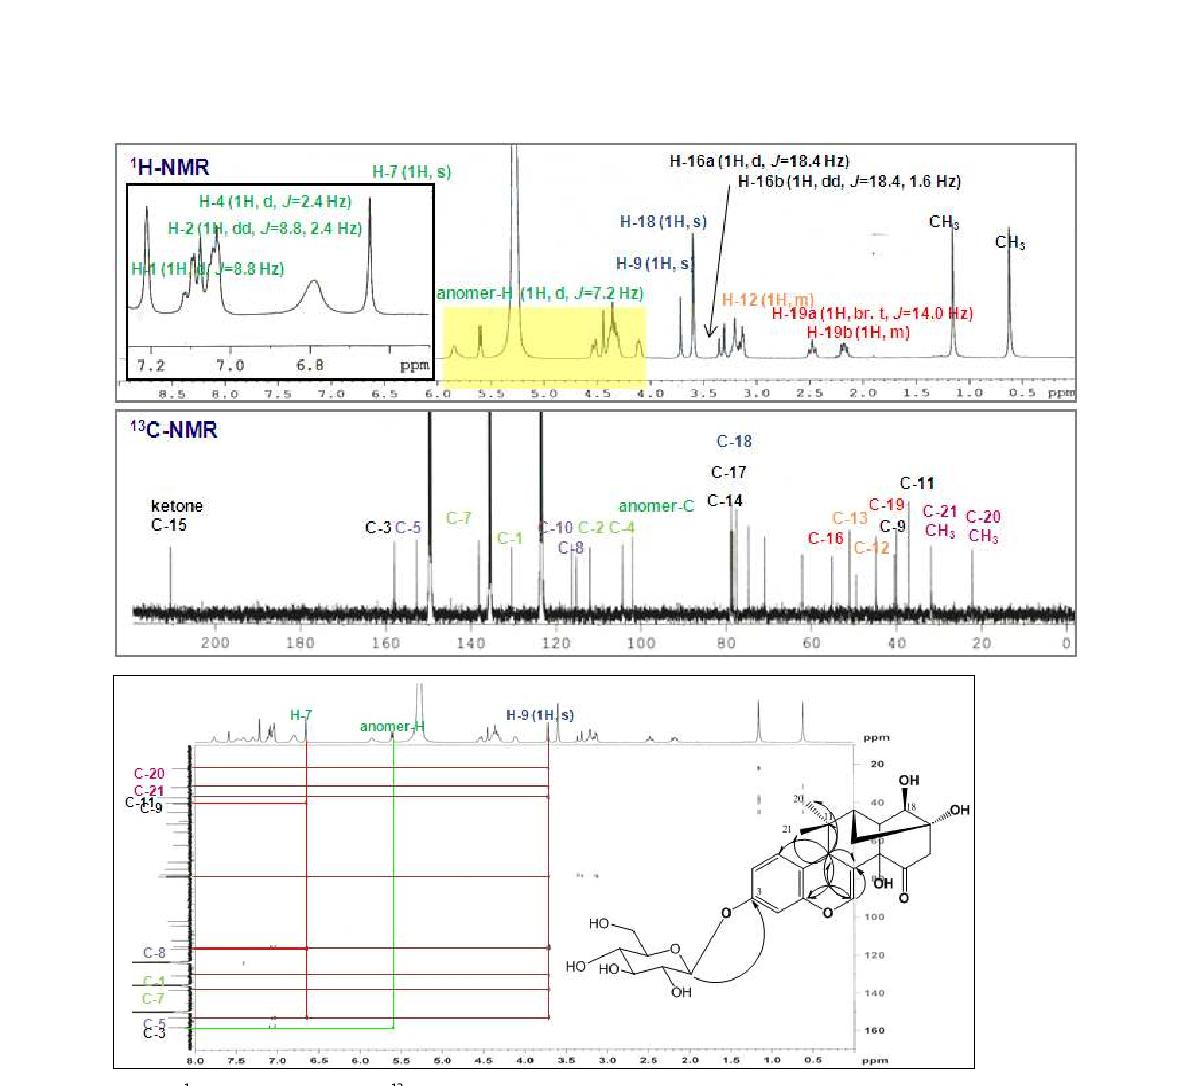 1H-NMR (400 MHz), 13C-NMR (100 MHz), and HMBC spectra of new compound (pyridine-d5).